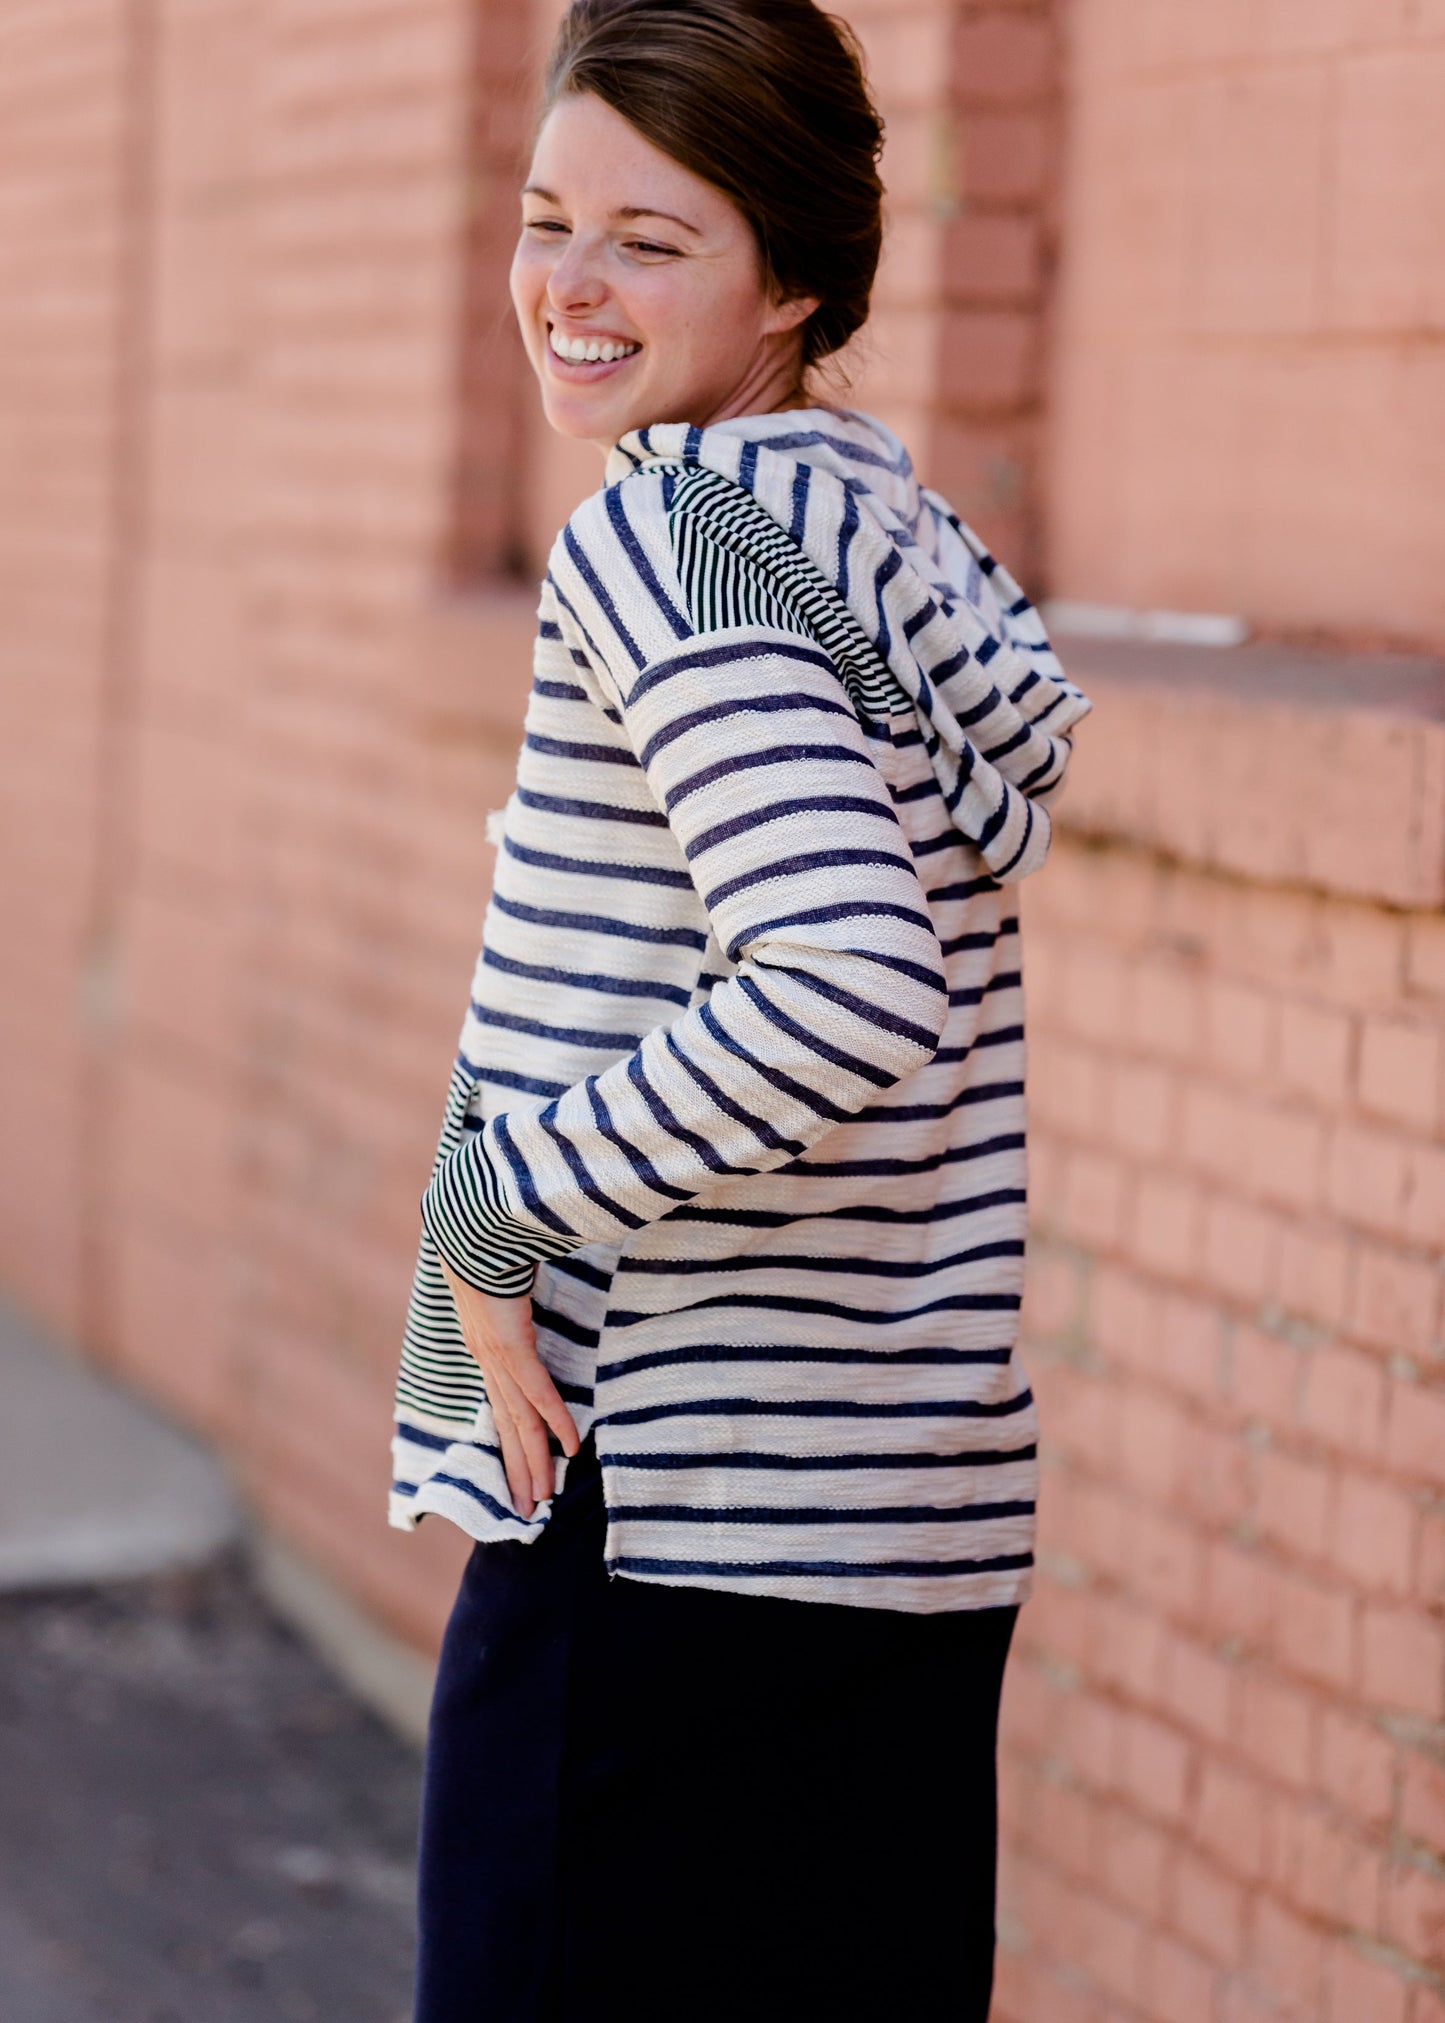 Mixed Stripe Lace Up Hooded Sweatshirt - FINAL SALE Tops